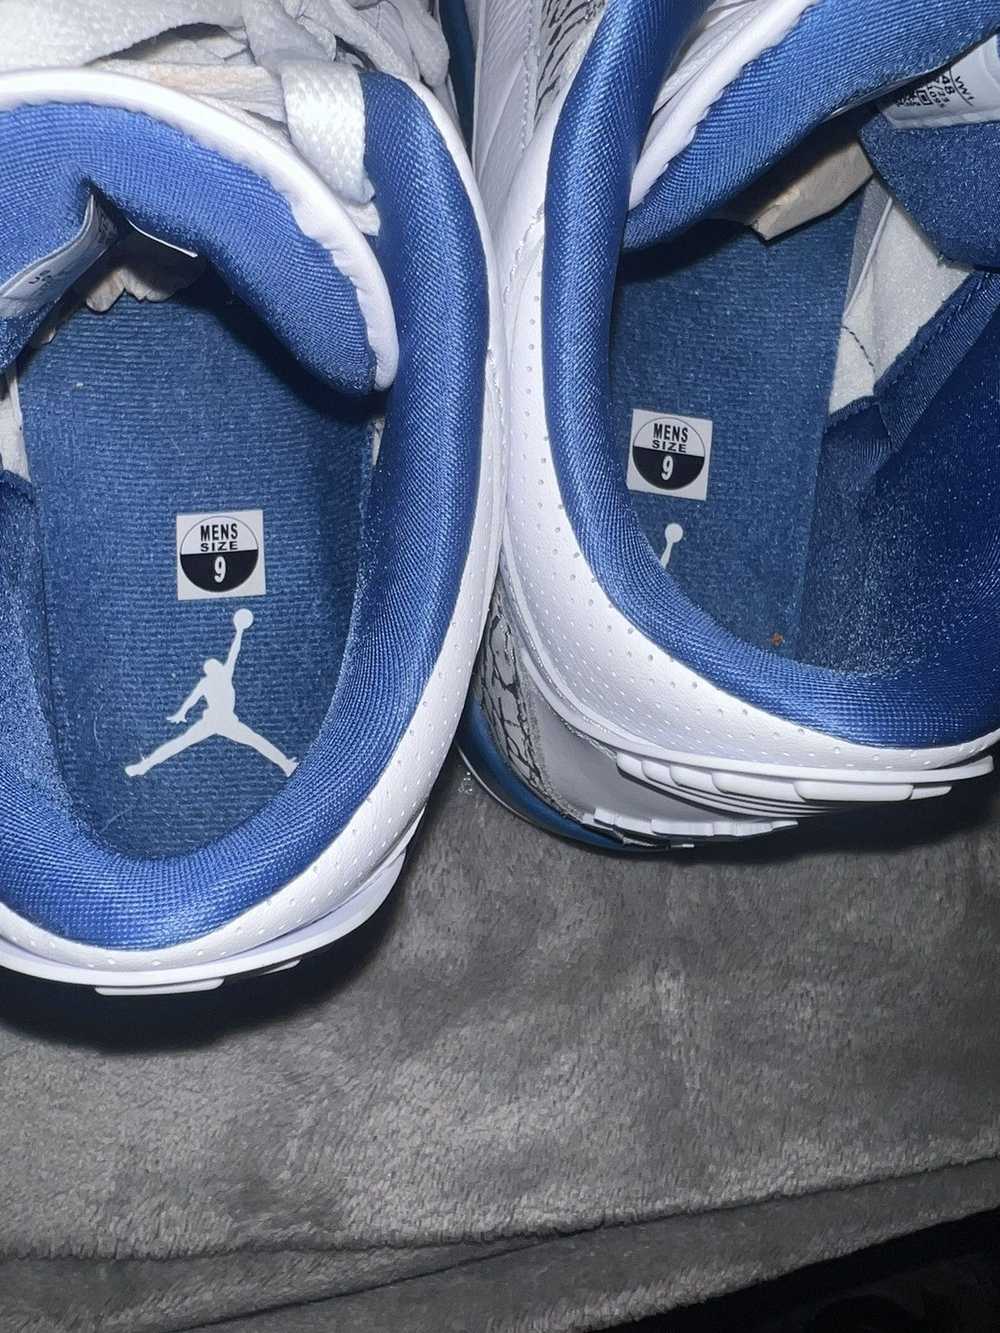 Jordan Brand × Nike Jordan 3 “Wizards” - image 5